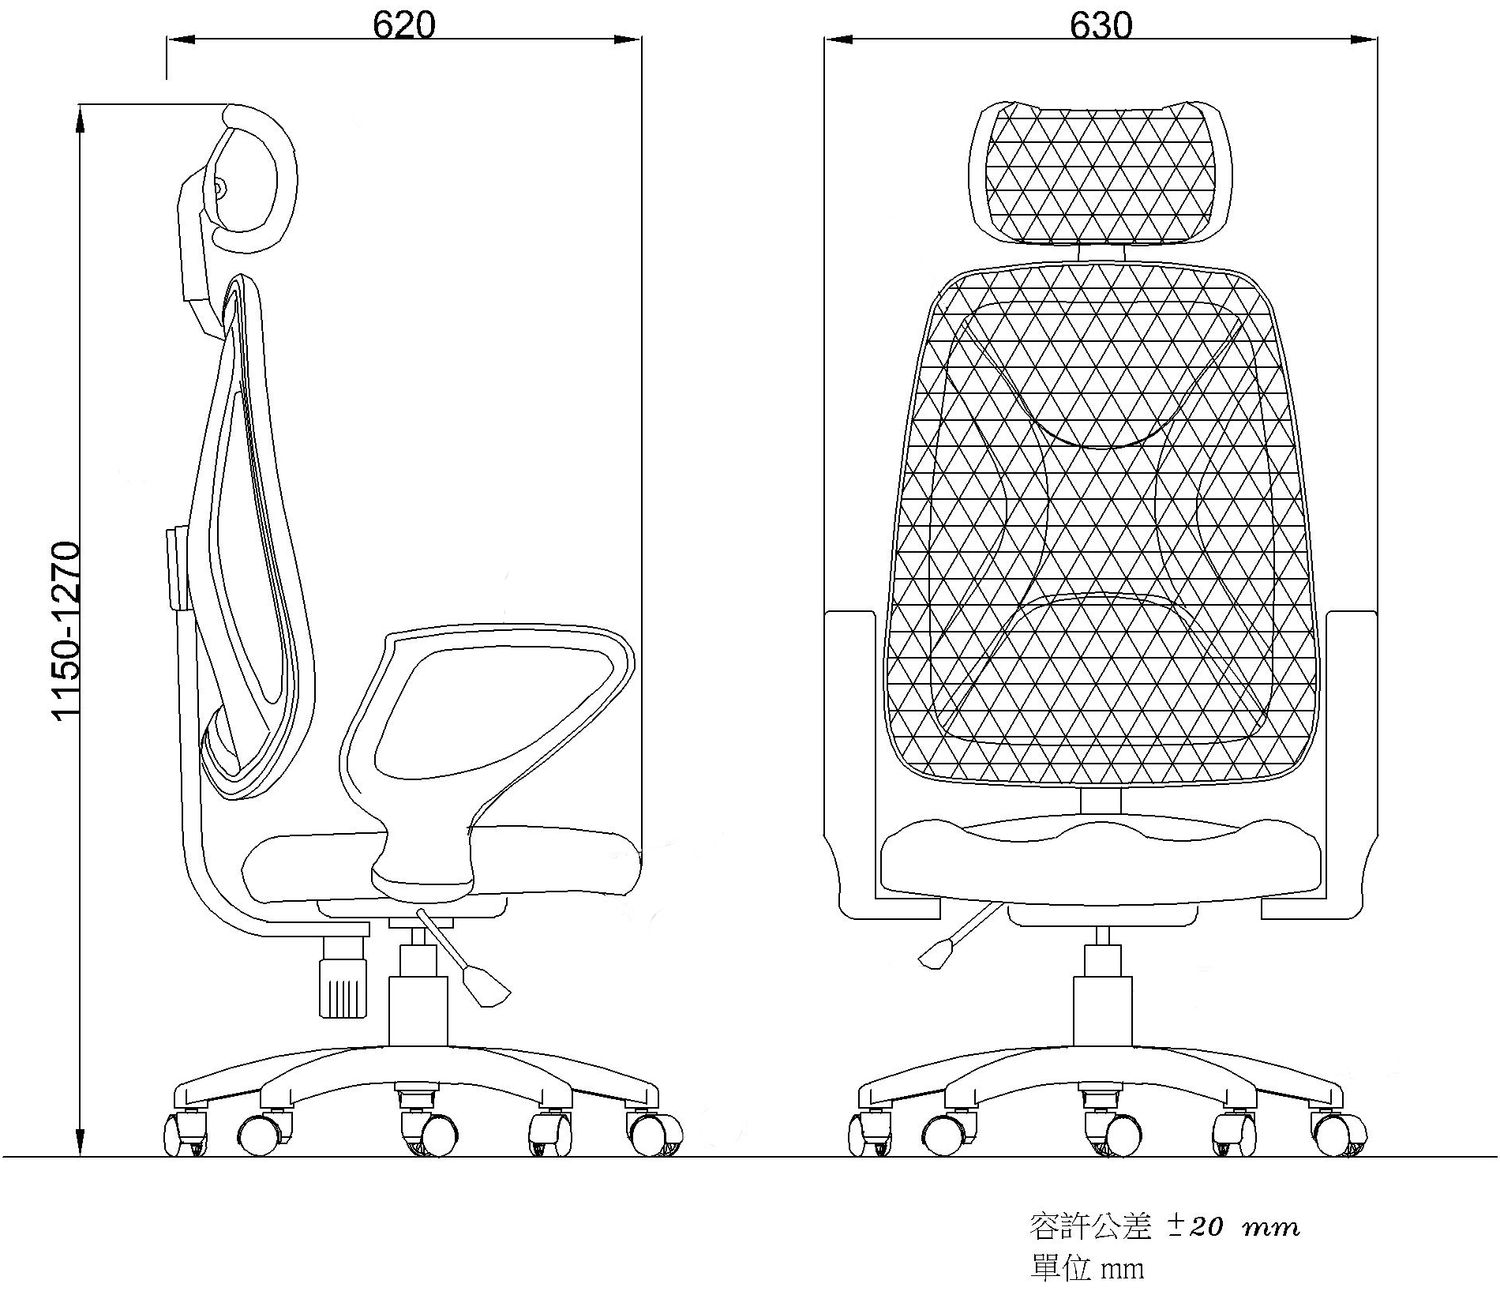 LMUK105A Ergonomic Mesh Chair